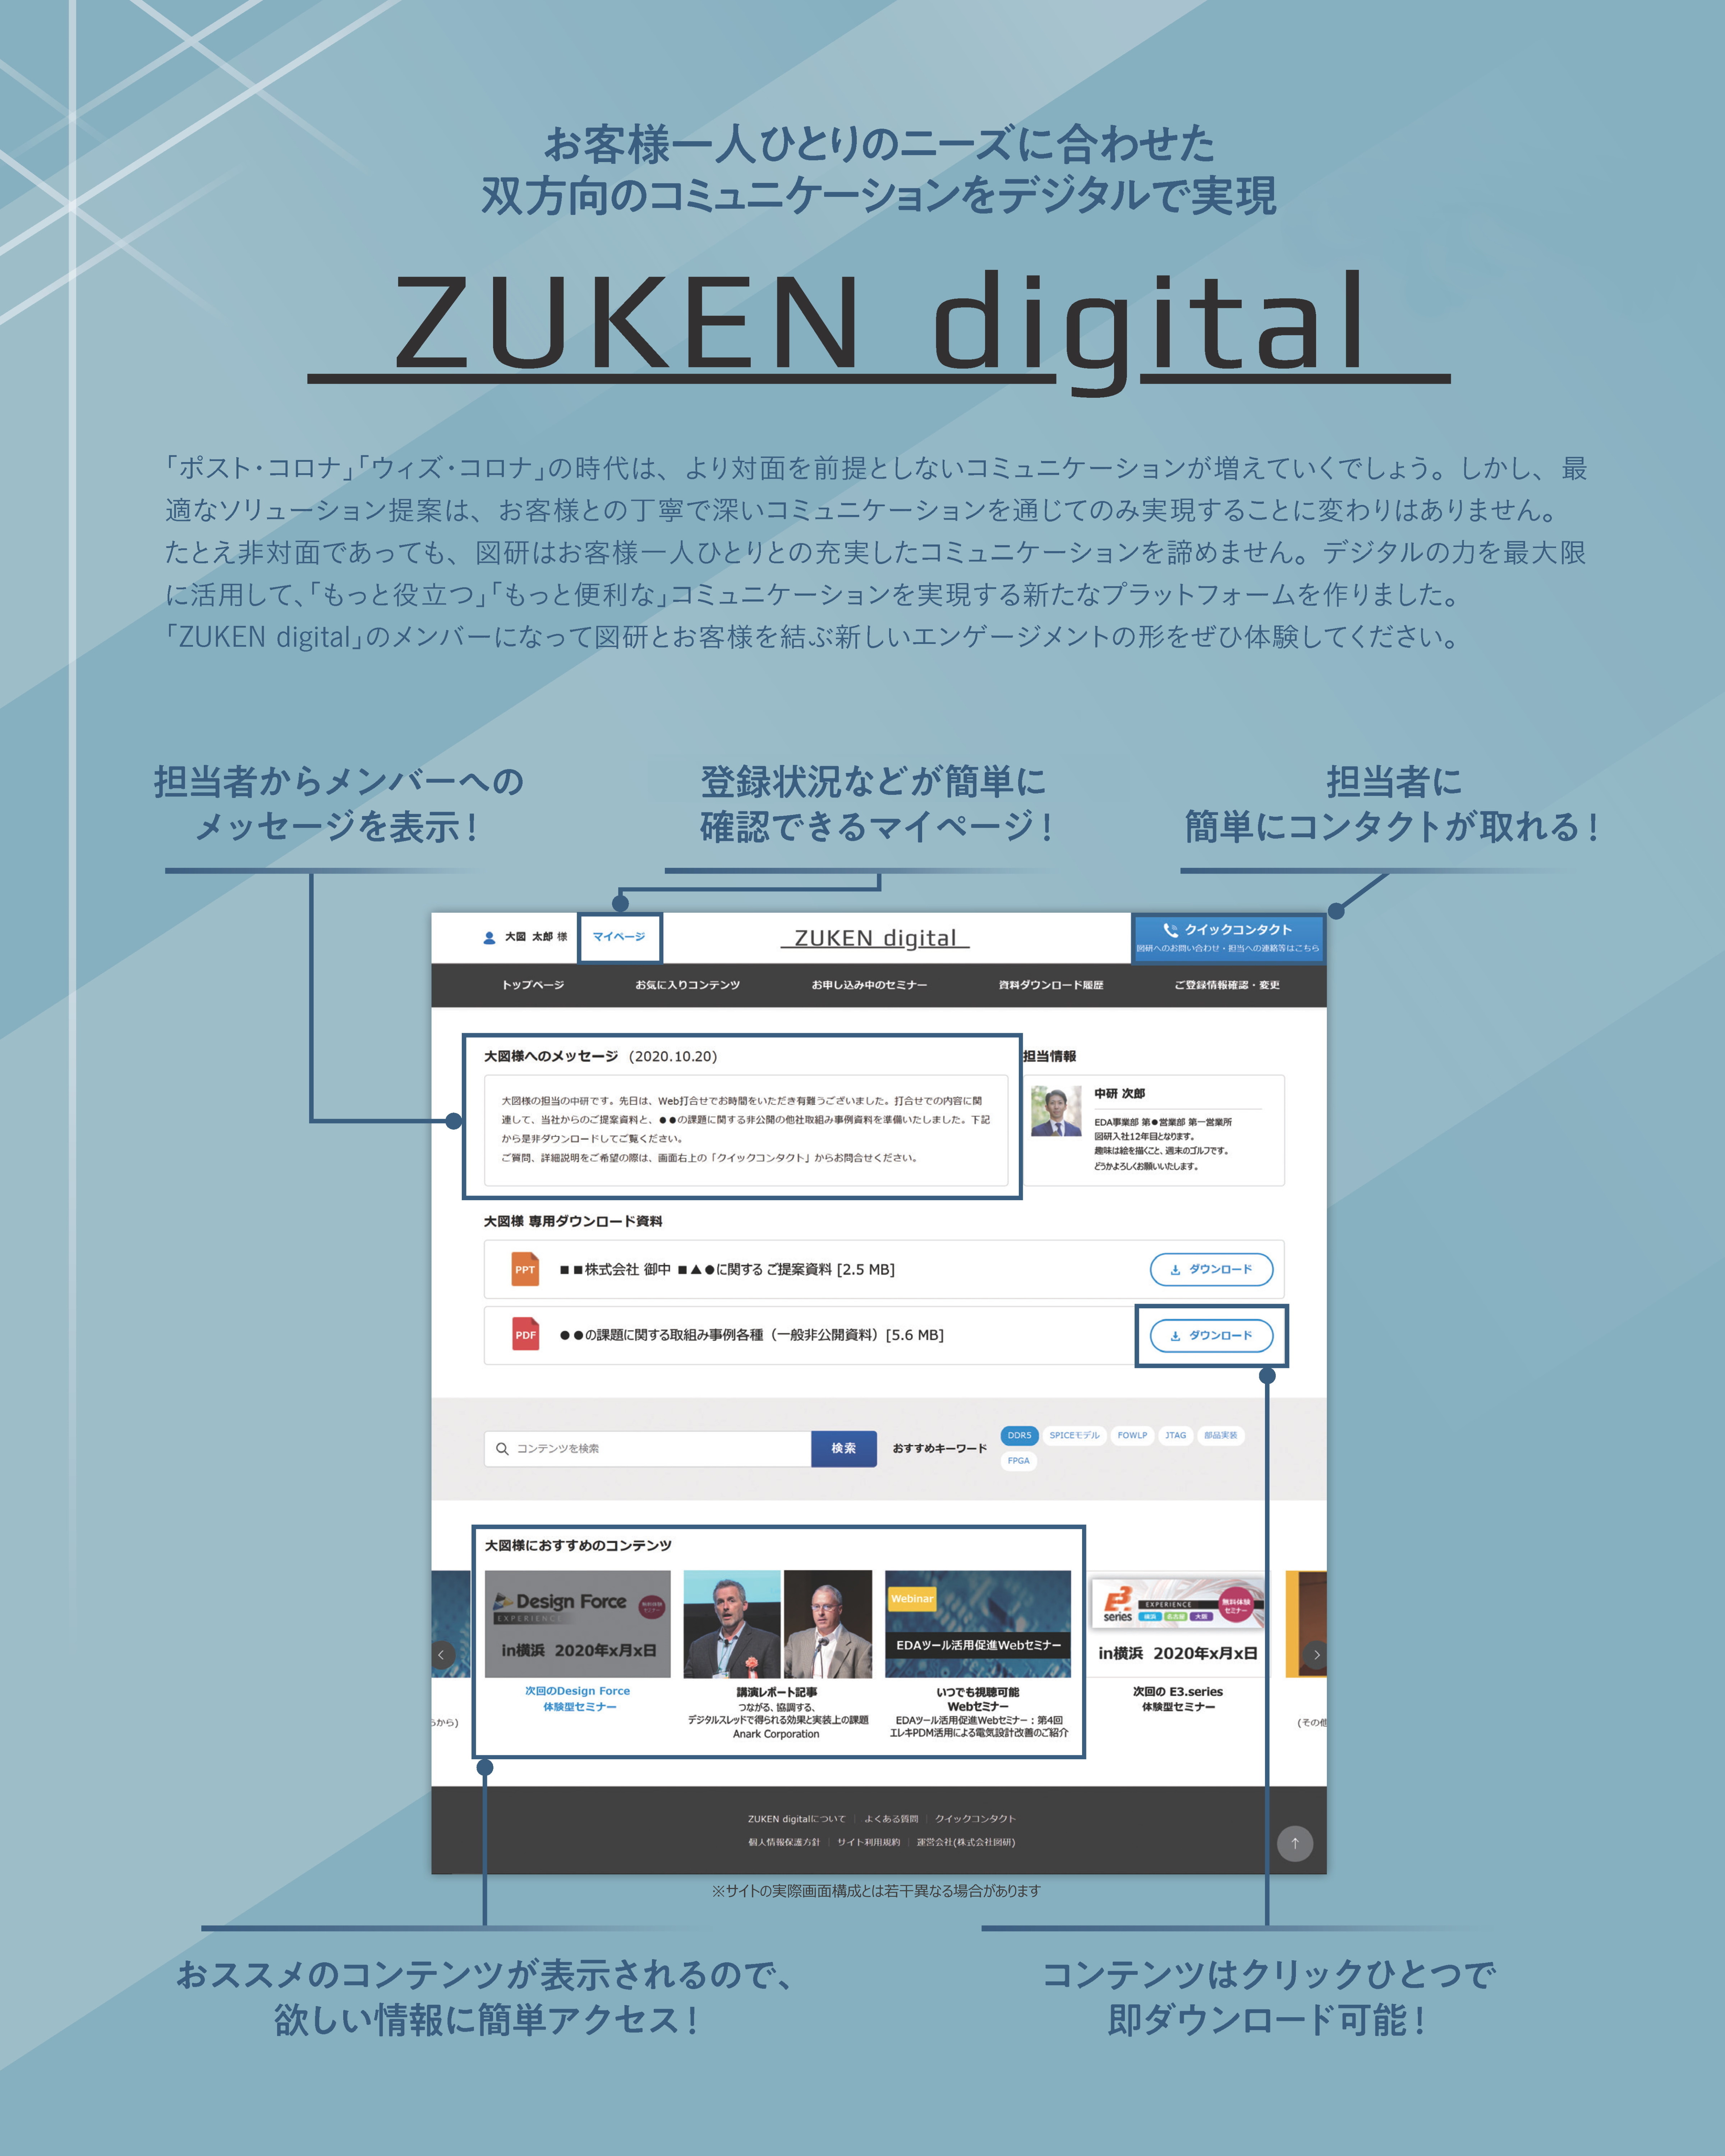 ZUKEN digitalとは？